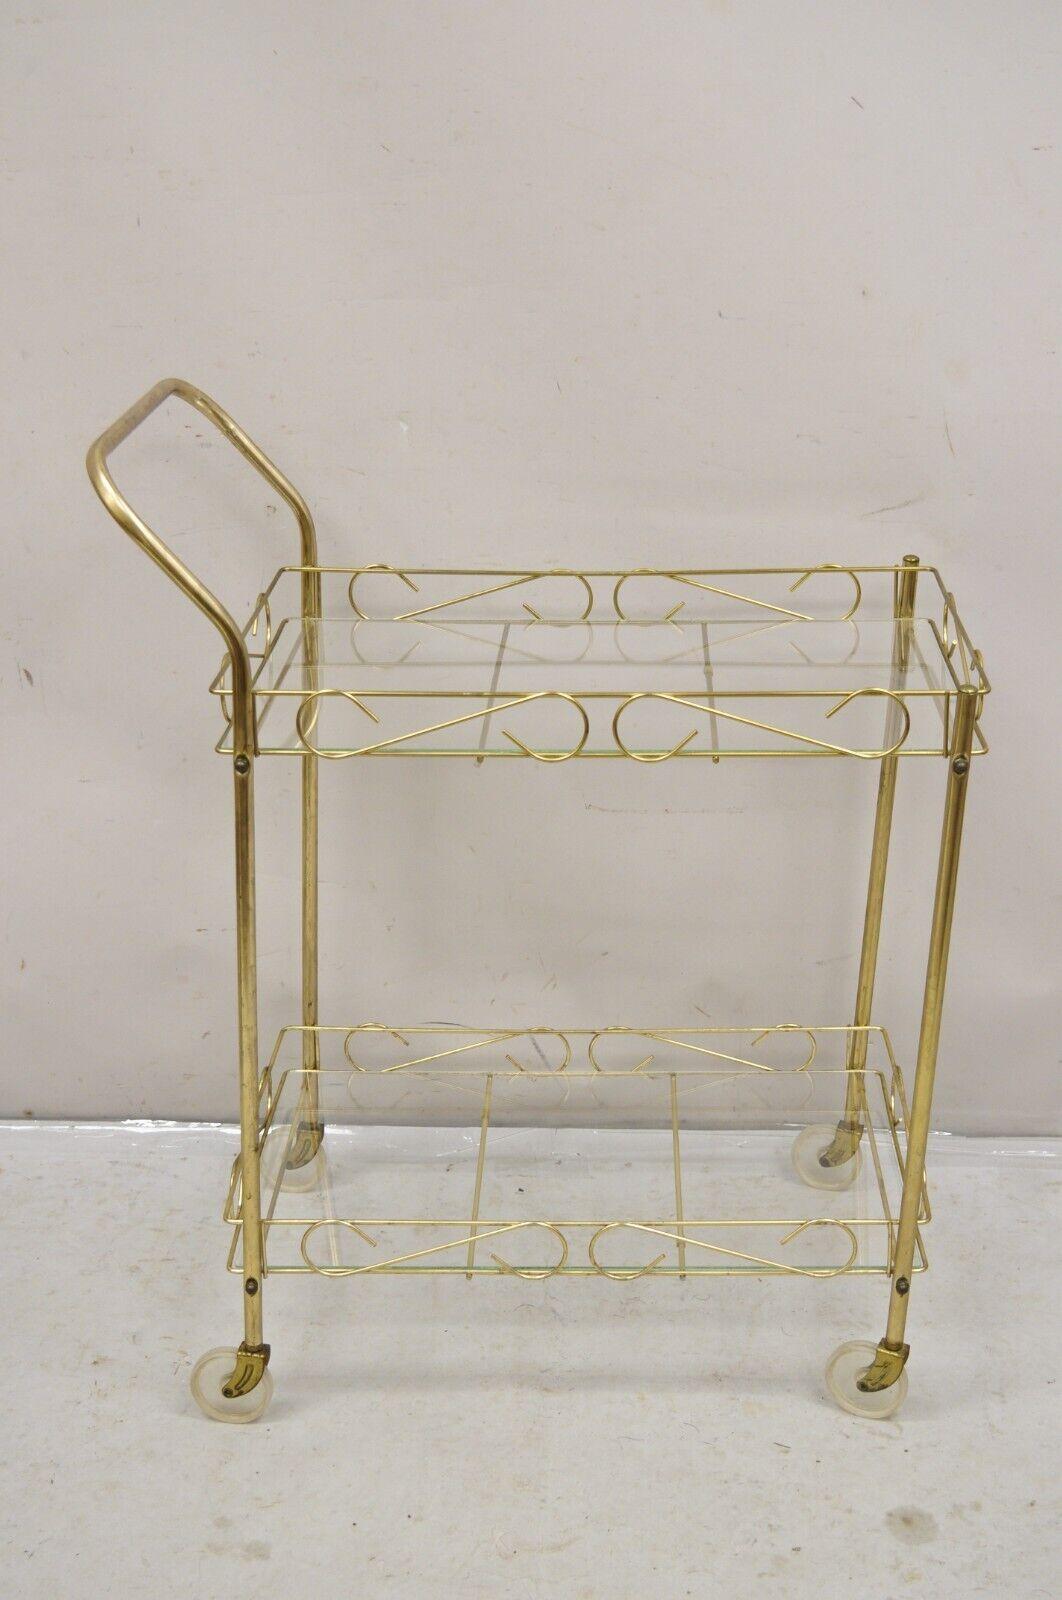 Vintage Mid Century Modern Gold Metal 2 Tier Rolling Bar Tea Cart Server with Glass Shelves. Circa 1970s. Measurements: 35